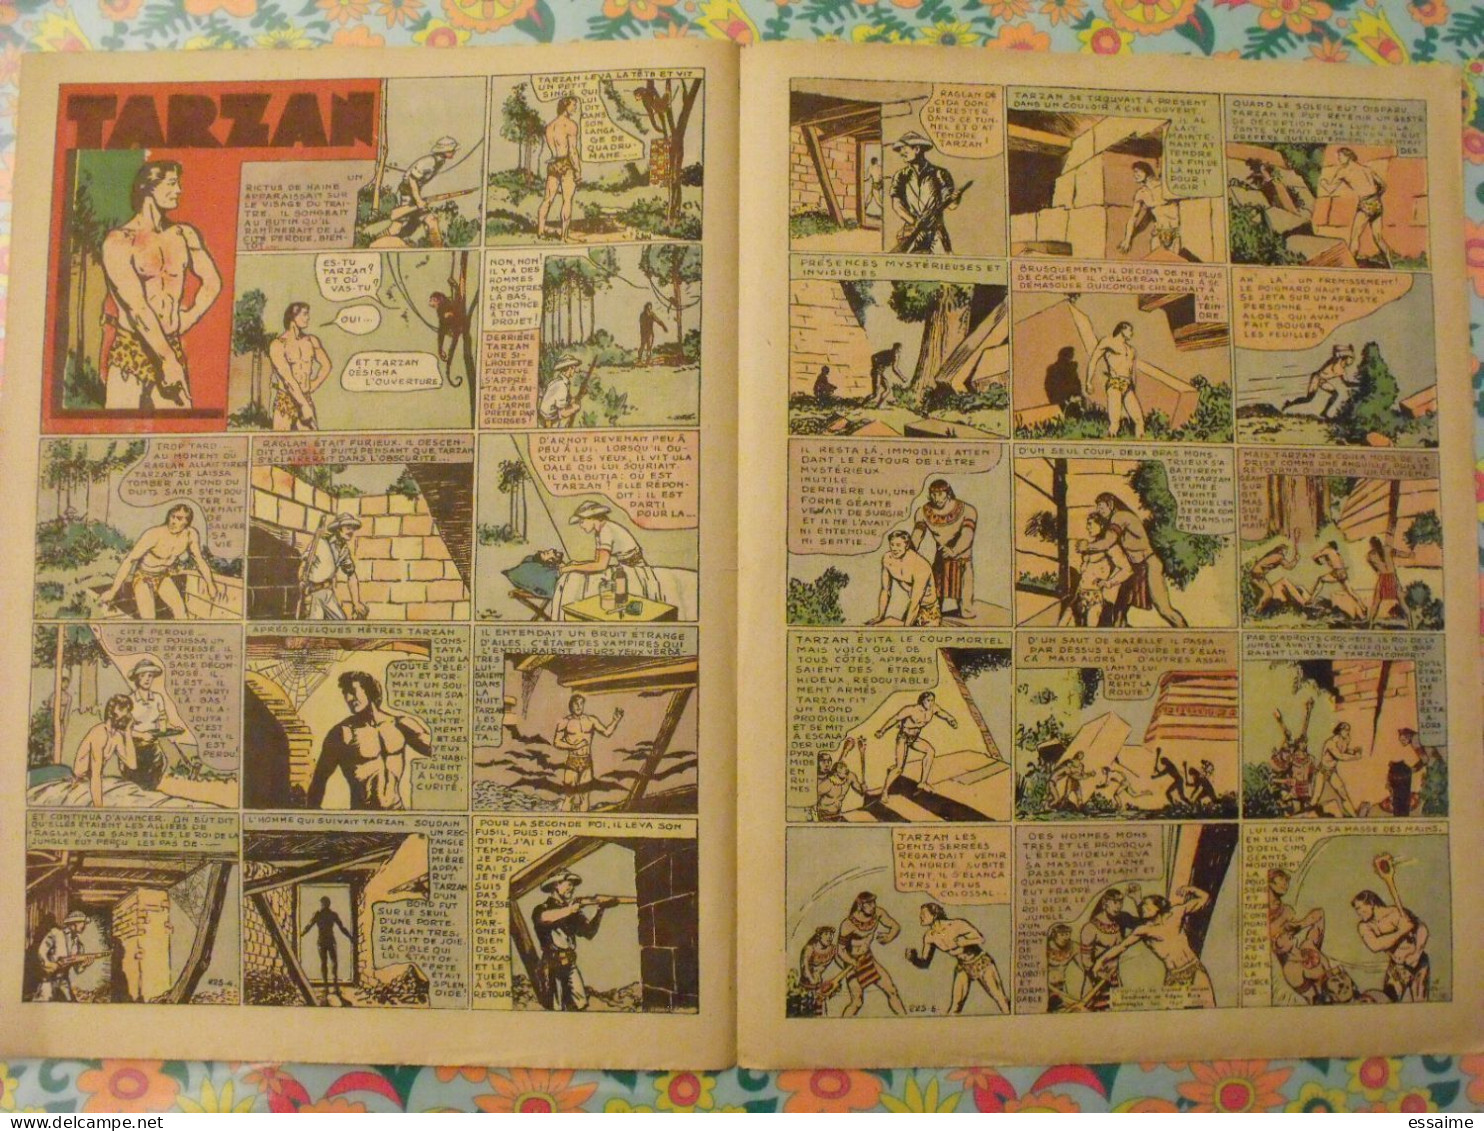 5 n° de Hurrah ! de 1939. Brick Bradford, Tarzan, le roi de la police montée, gordon. A redécouvrir